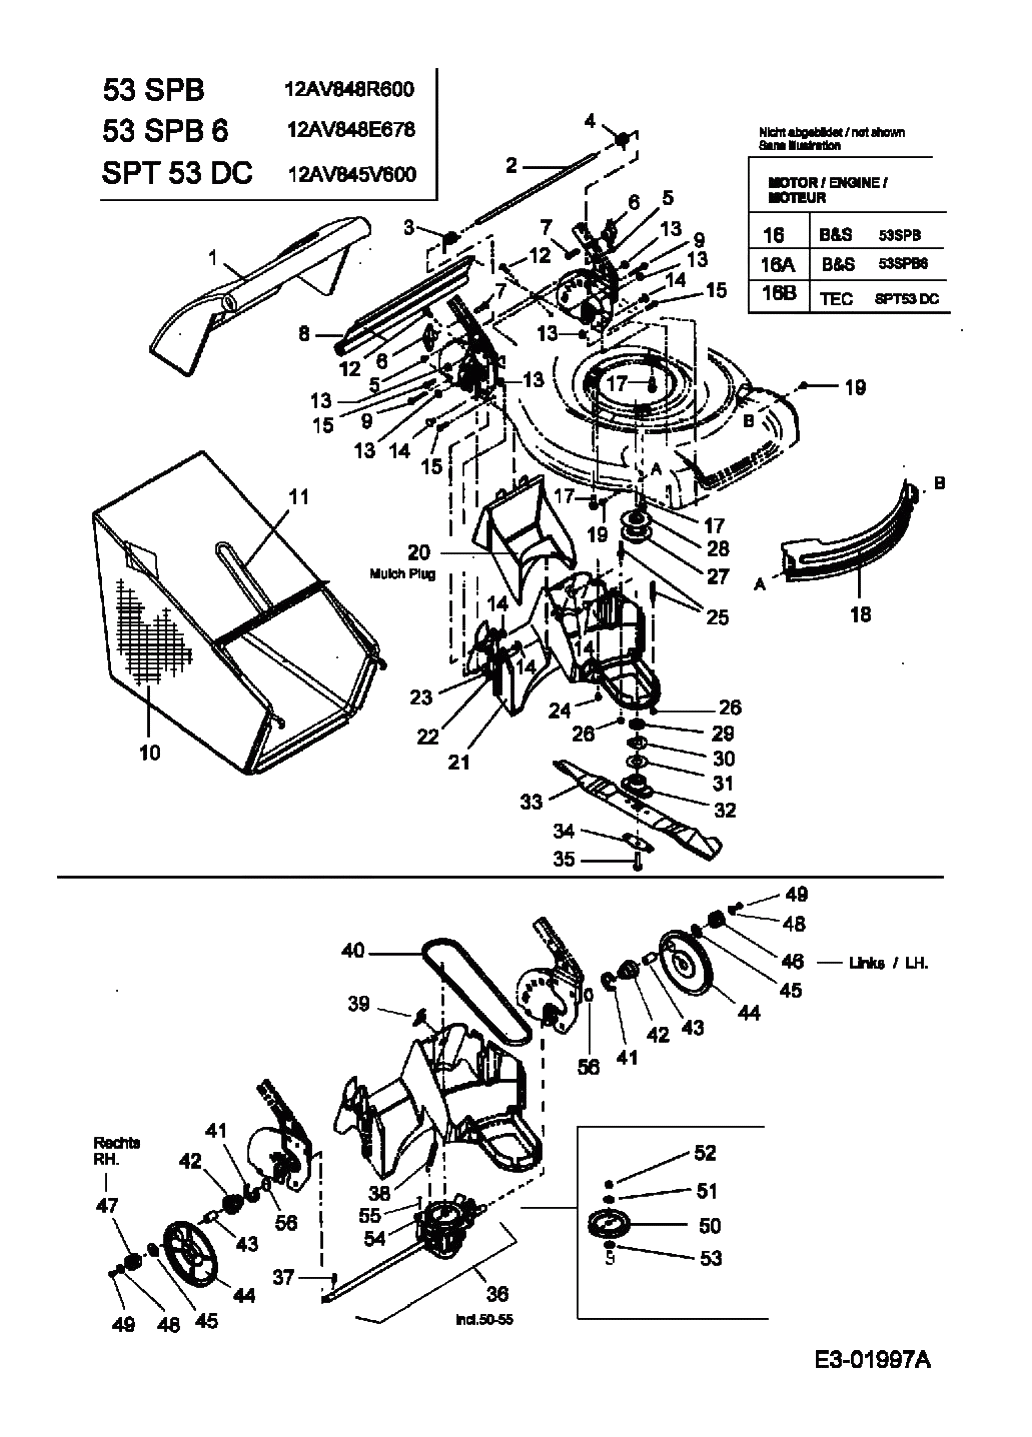 MTD Артикул 12AV845V600 (год выпуска 2005). Коробка передач, травосборник, нож, двигатель